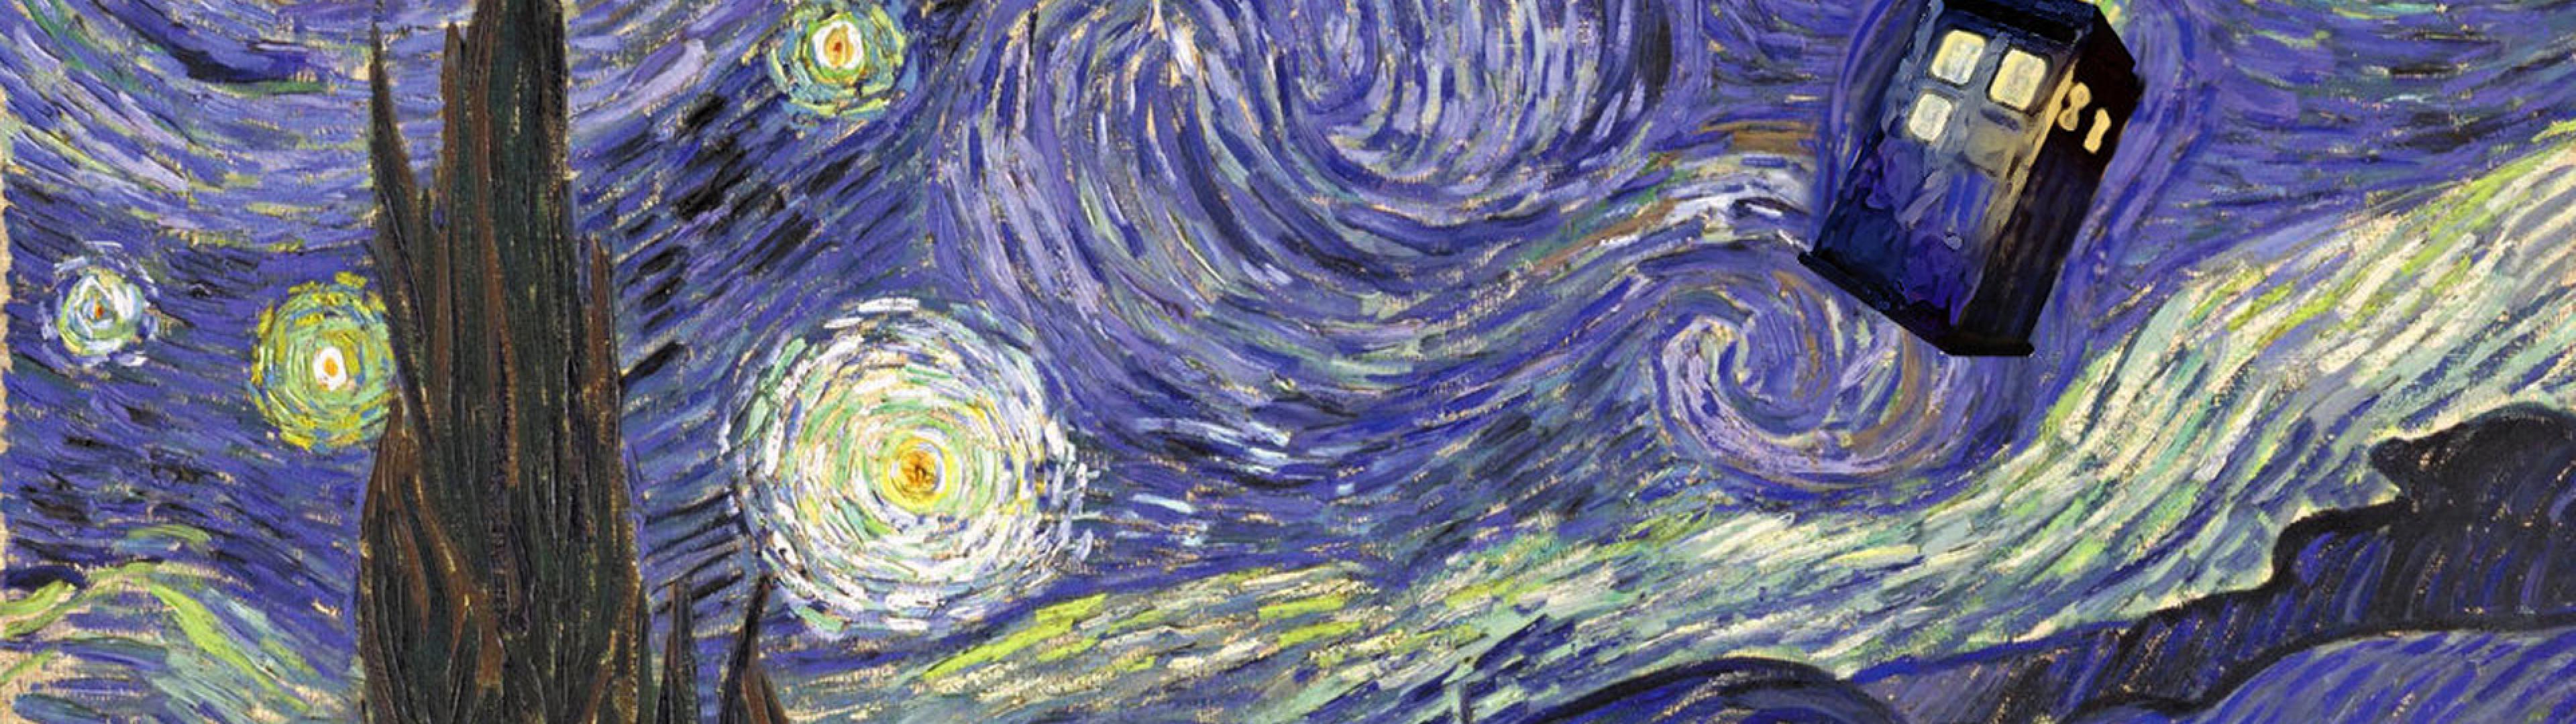 Doctor Who Starry Night Tardis Vincent Van Gogh